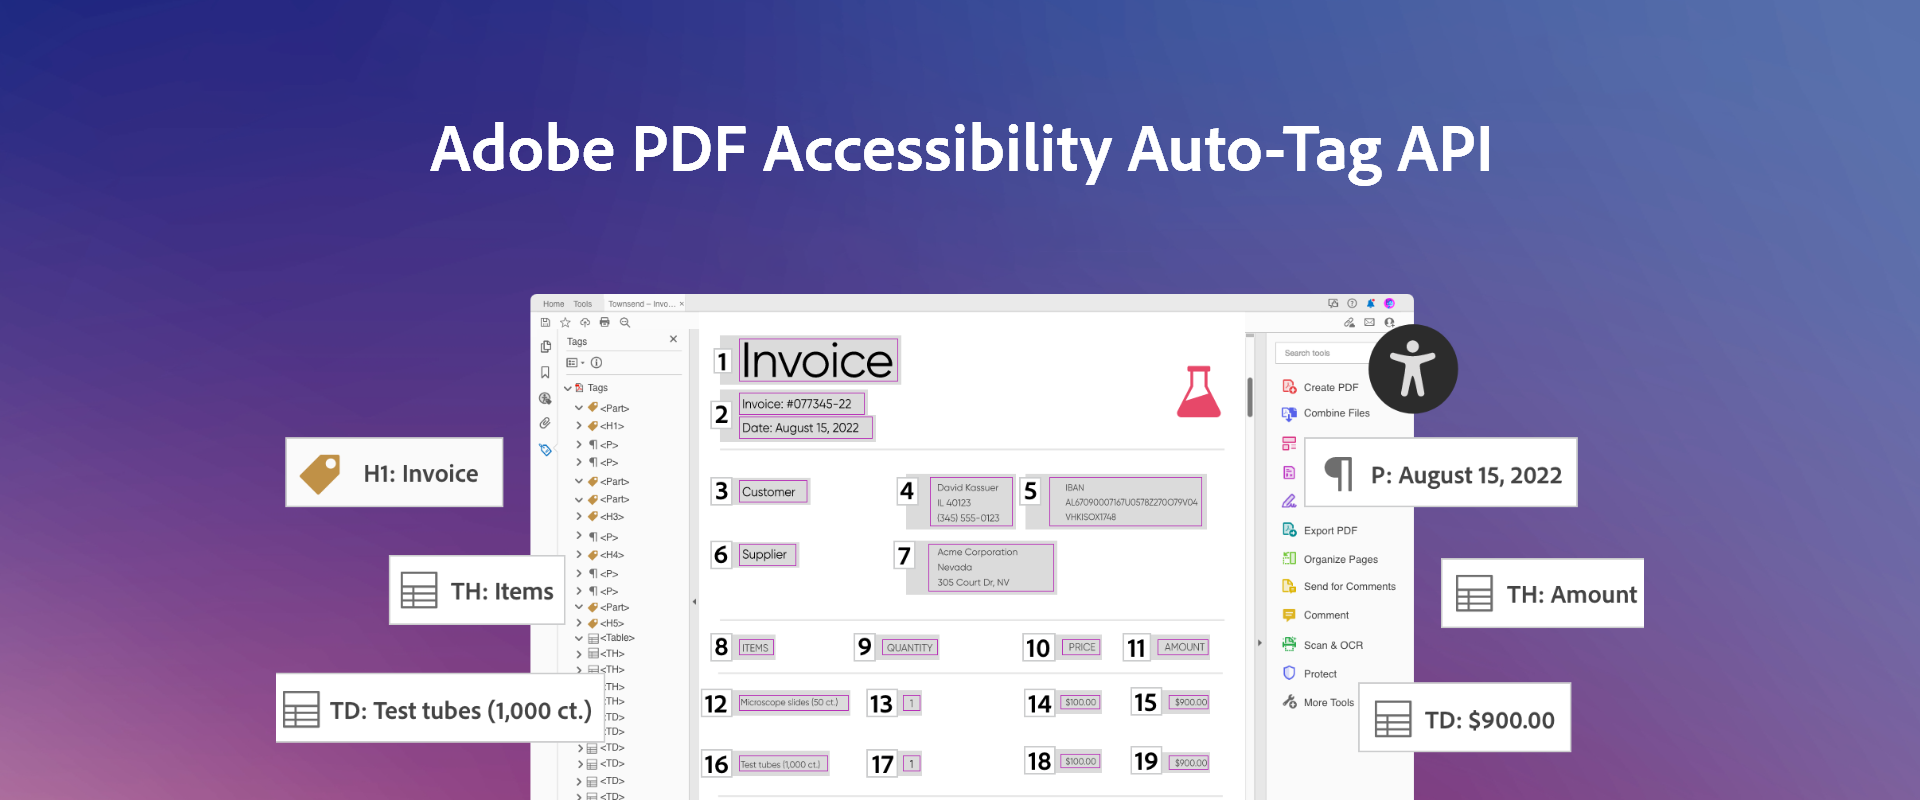 Adobe เปิดตัว Adobe PDF Accessibility Auto-Tag API ฟีเจอร์ AI รองรับการเข้าถึงเอกสารดิจิทัลแบบอัตโนมัติได้มากยิ่งขึ้น